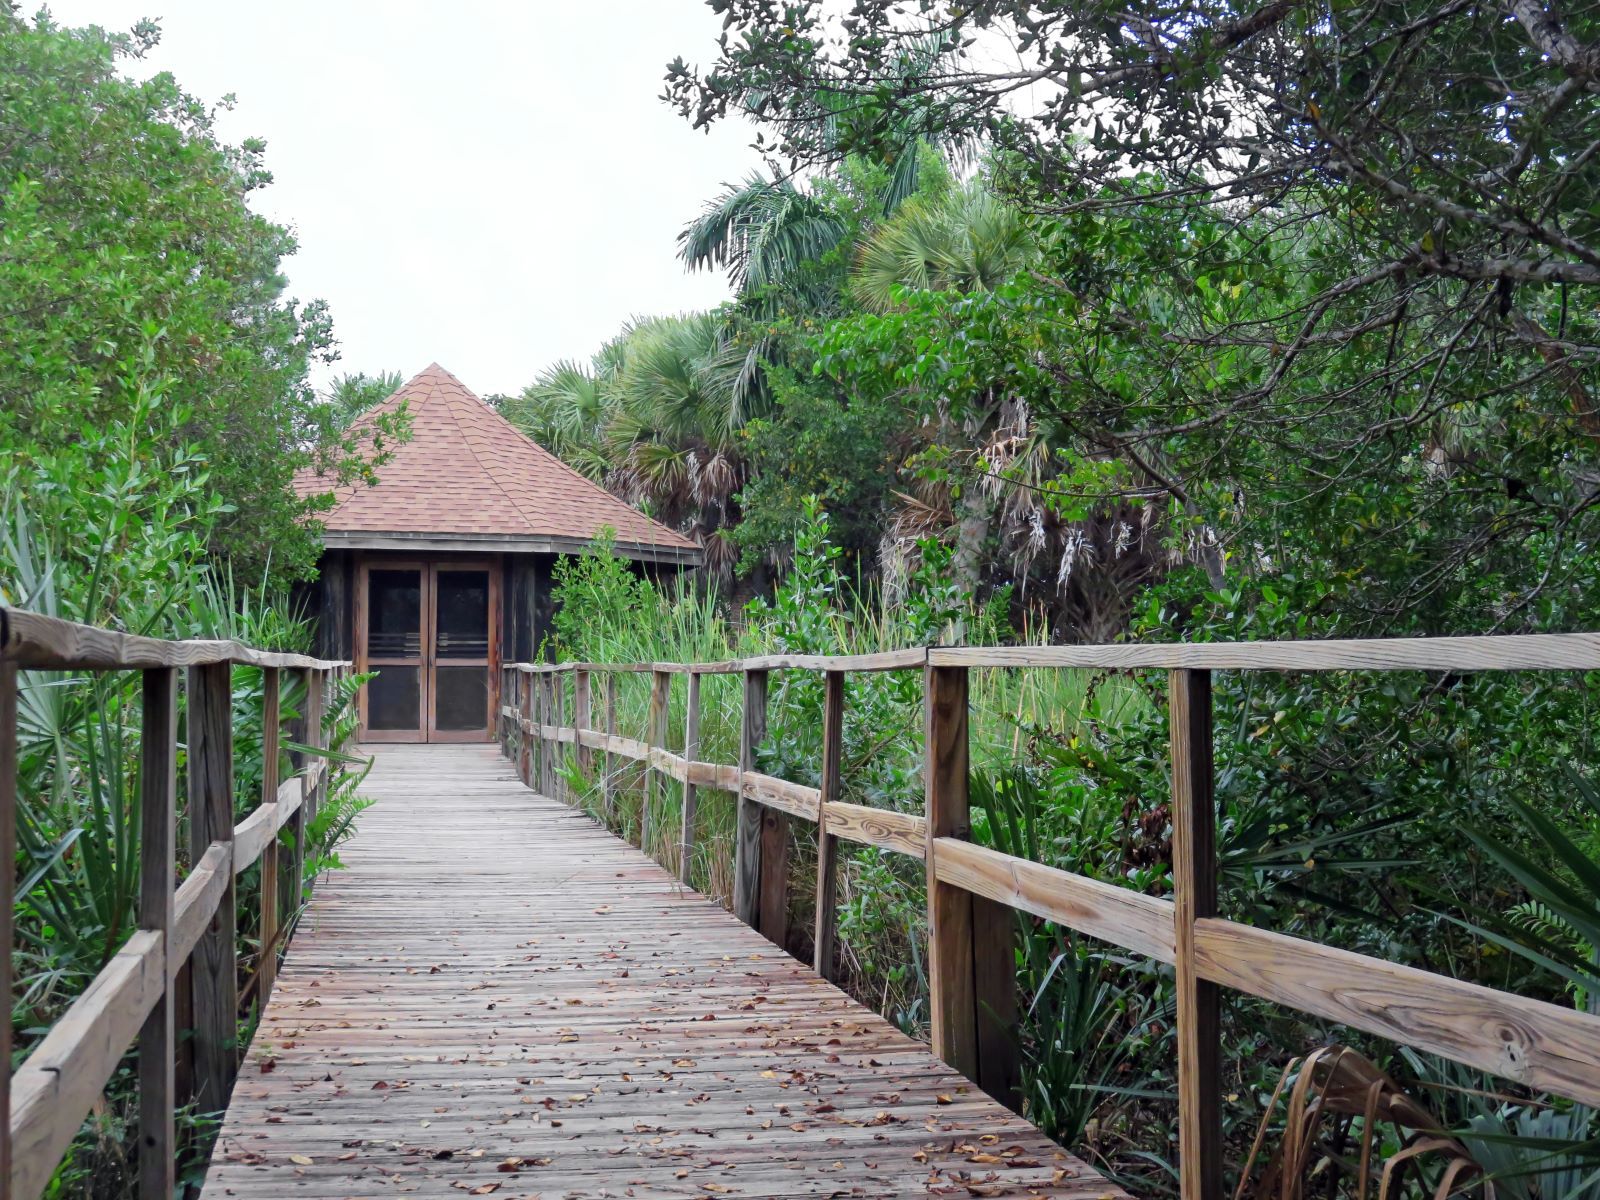 Sanibel - Captiva Conservation Foundation on Sanibel Island, Florida